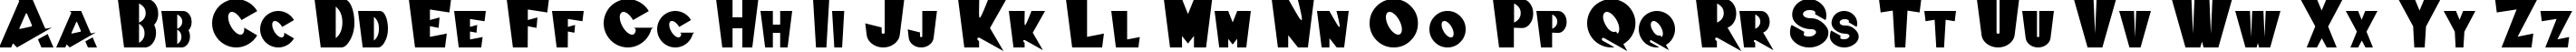 Пример написания английского алфавита шрифтом Swiss Cheesed